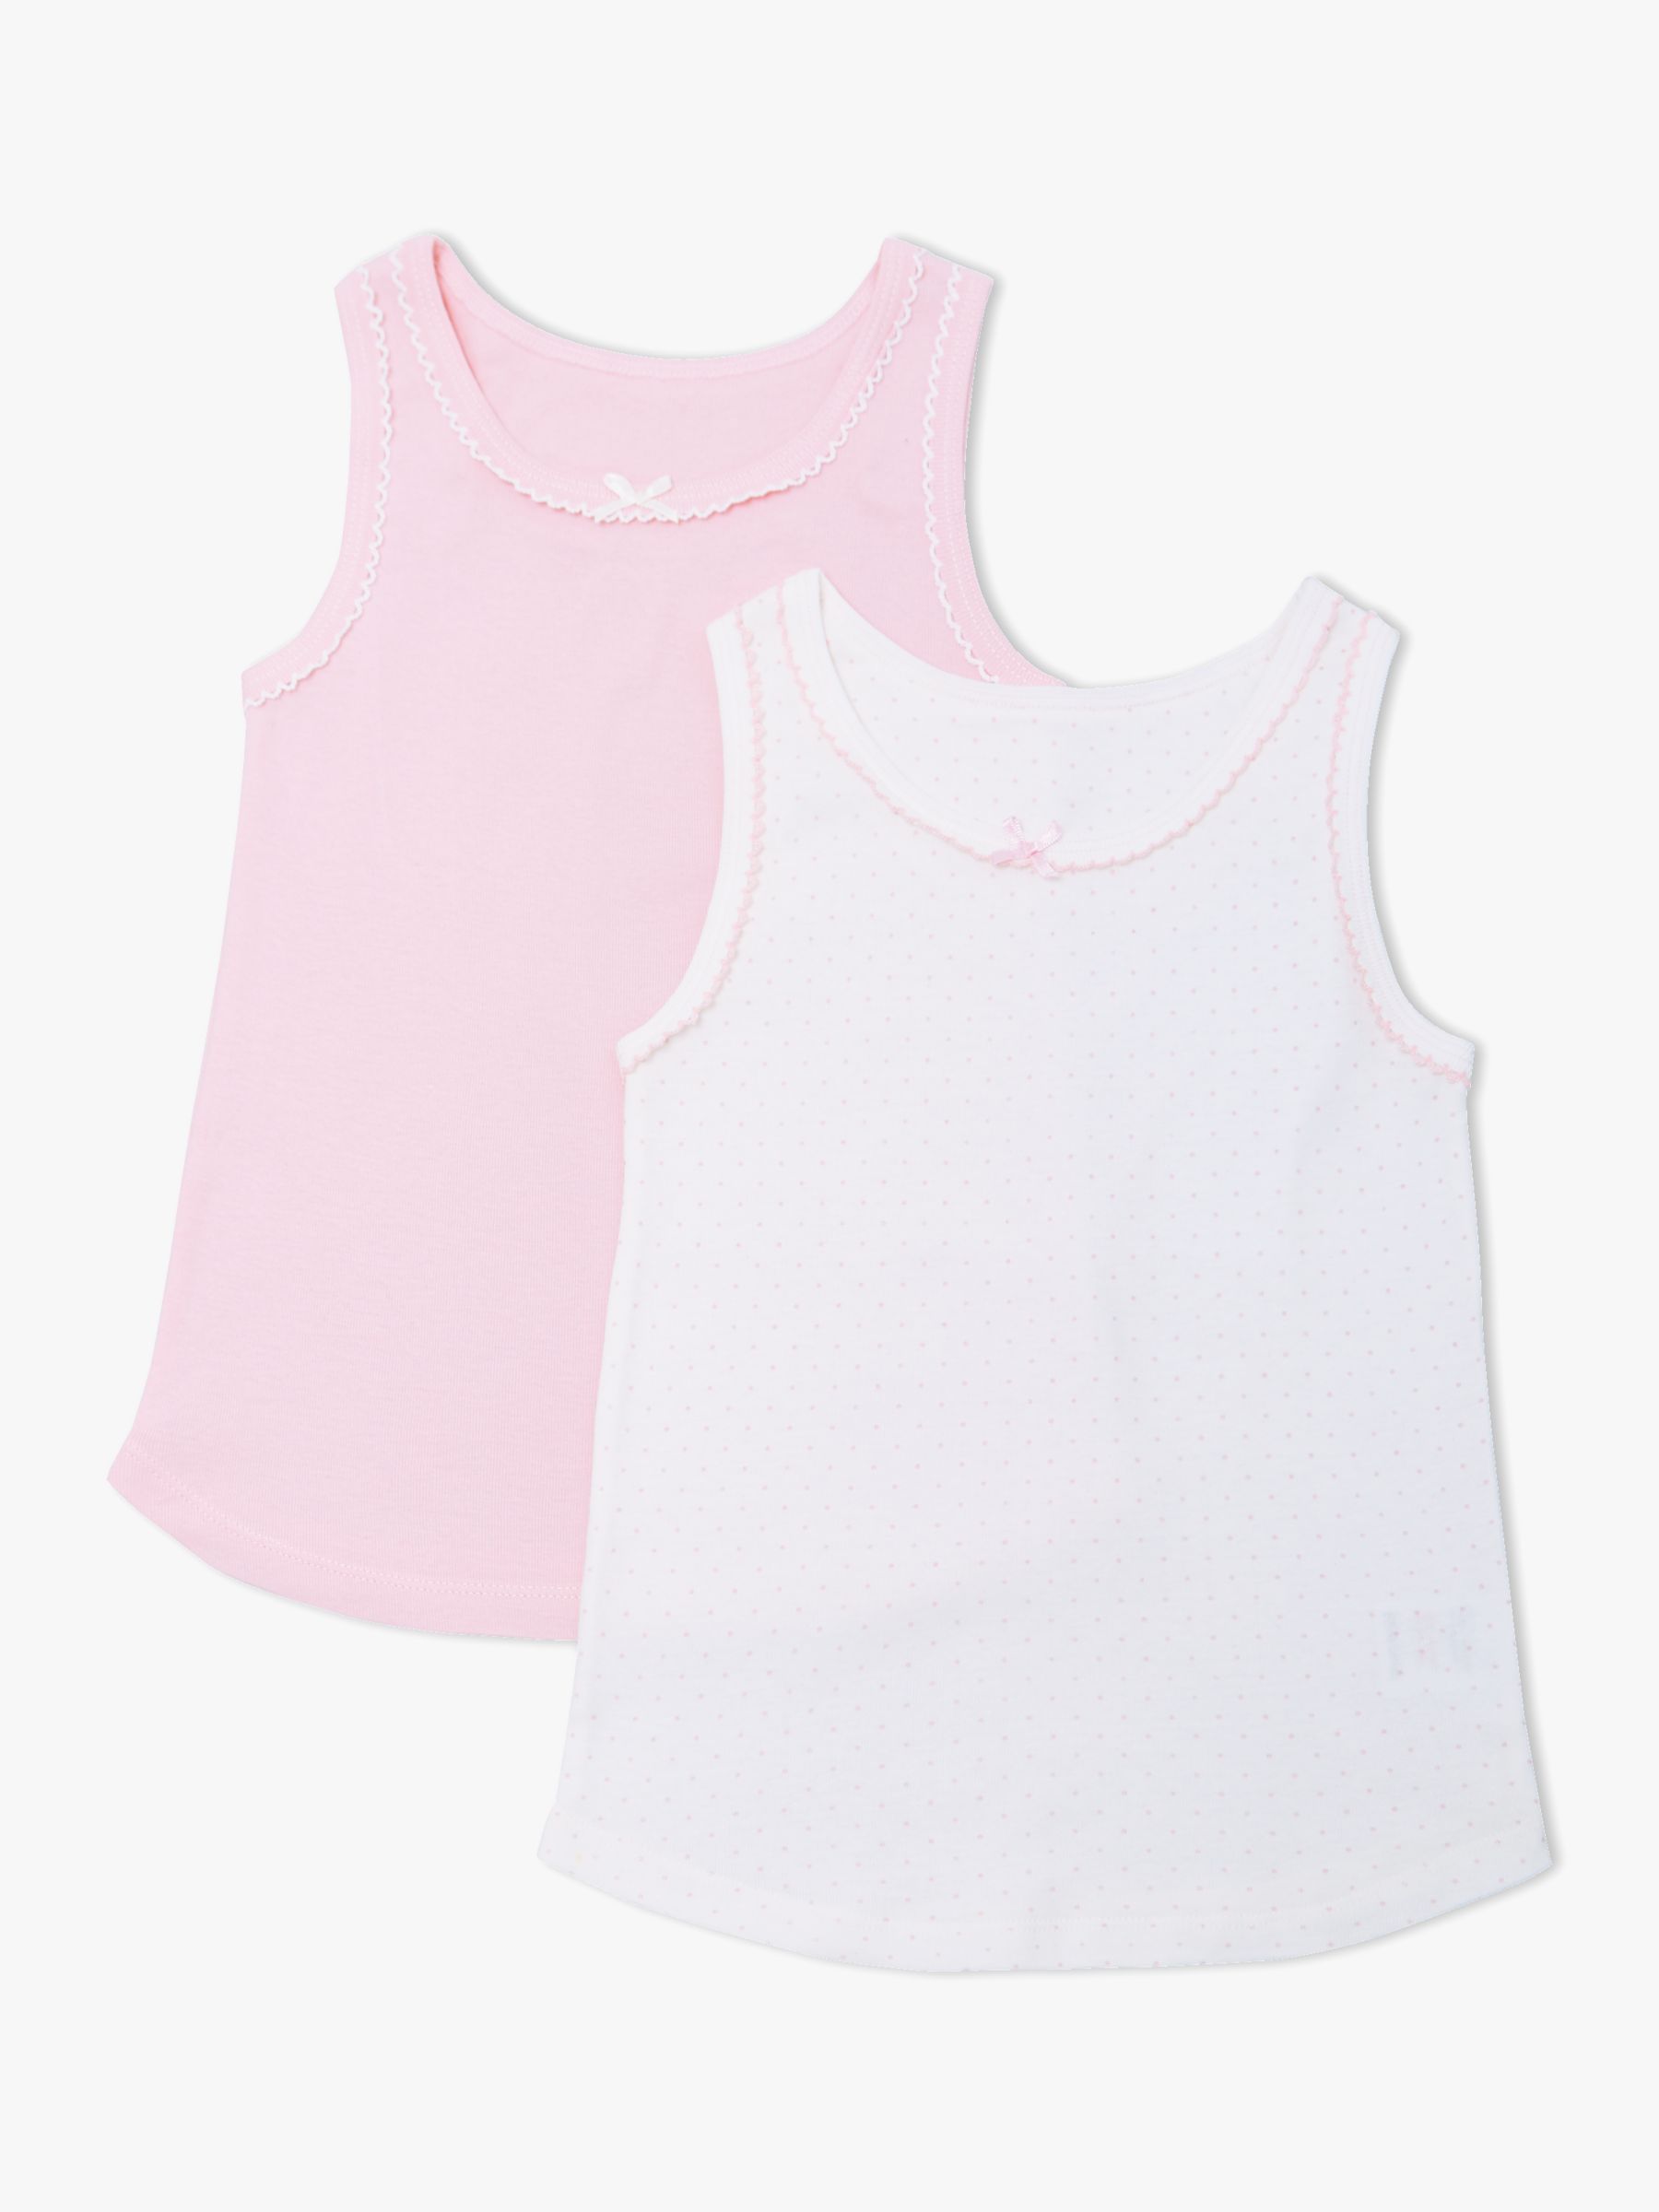 John Lewis Kids' Cotton Vest Tops, Pack of 2, Pink